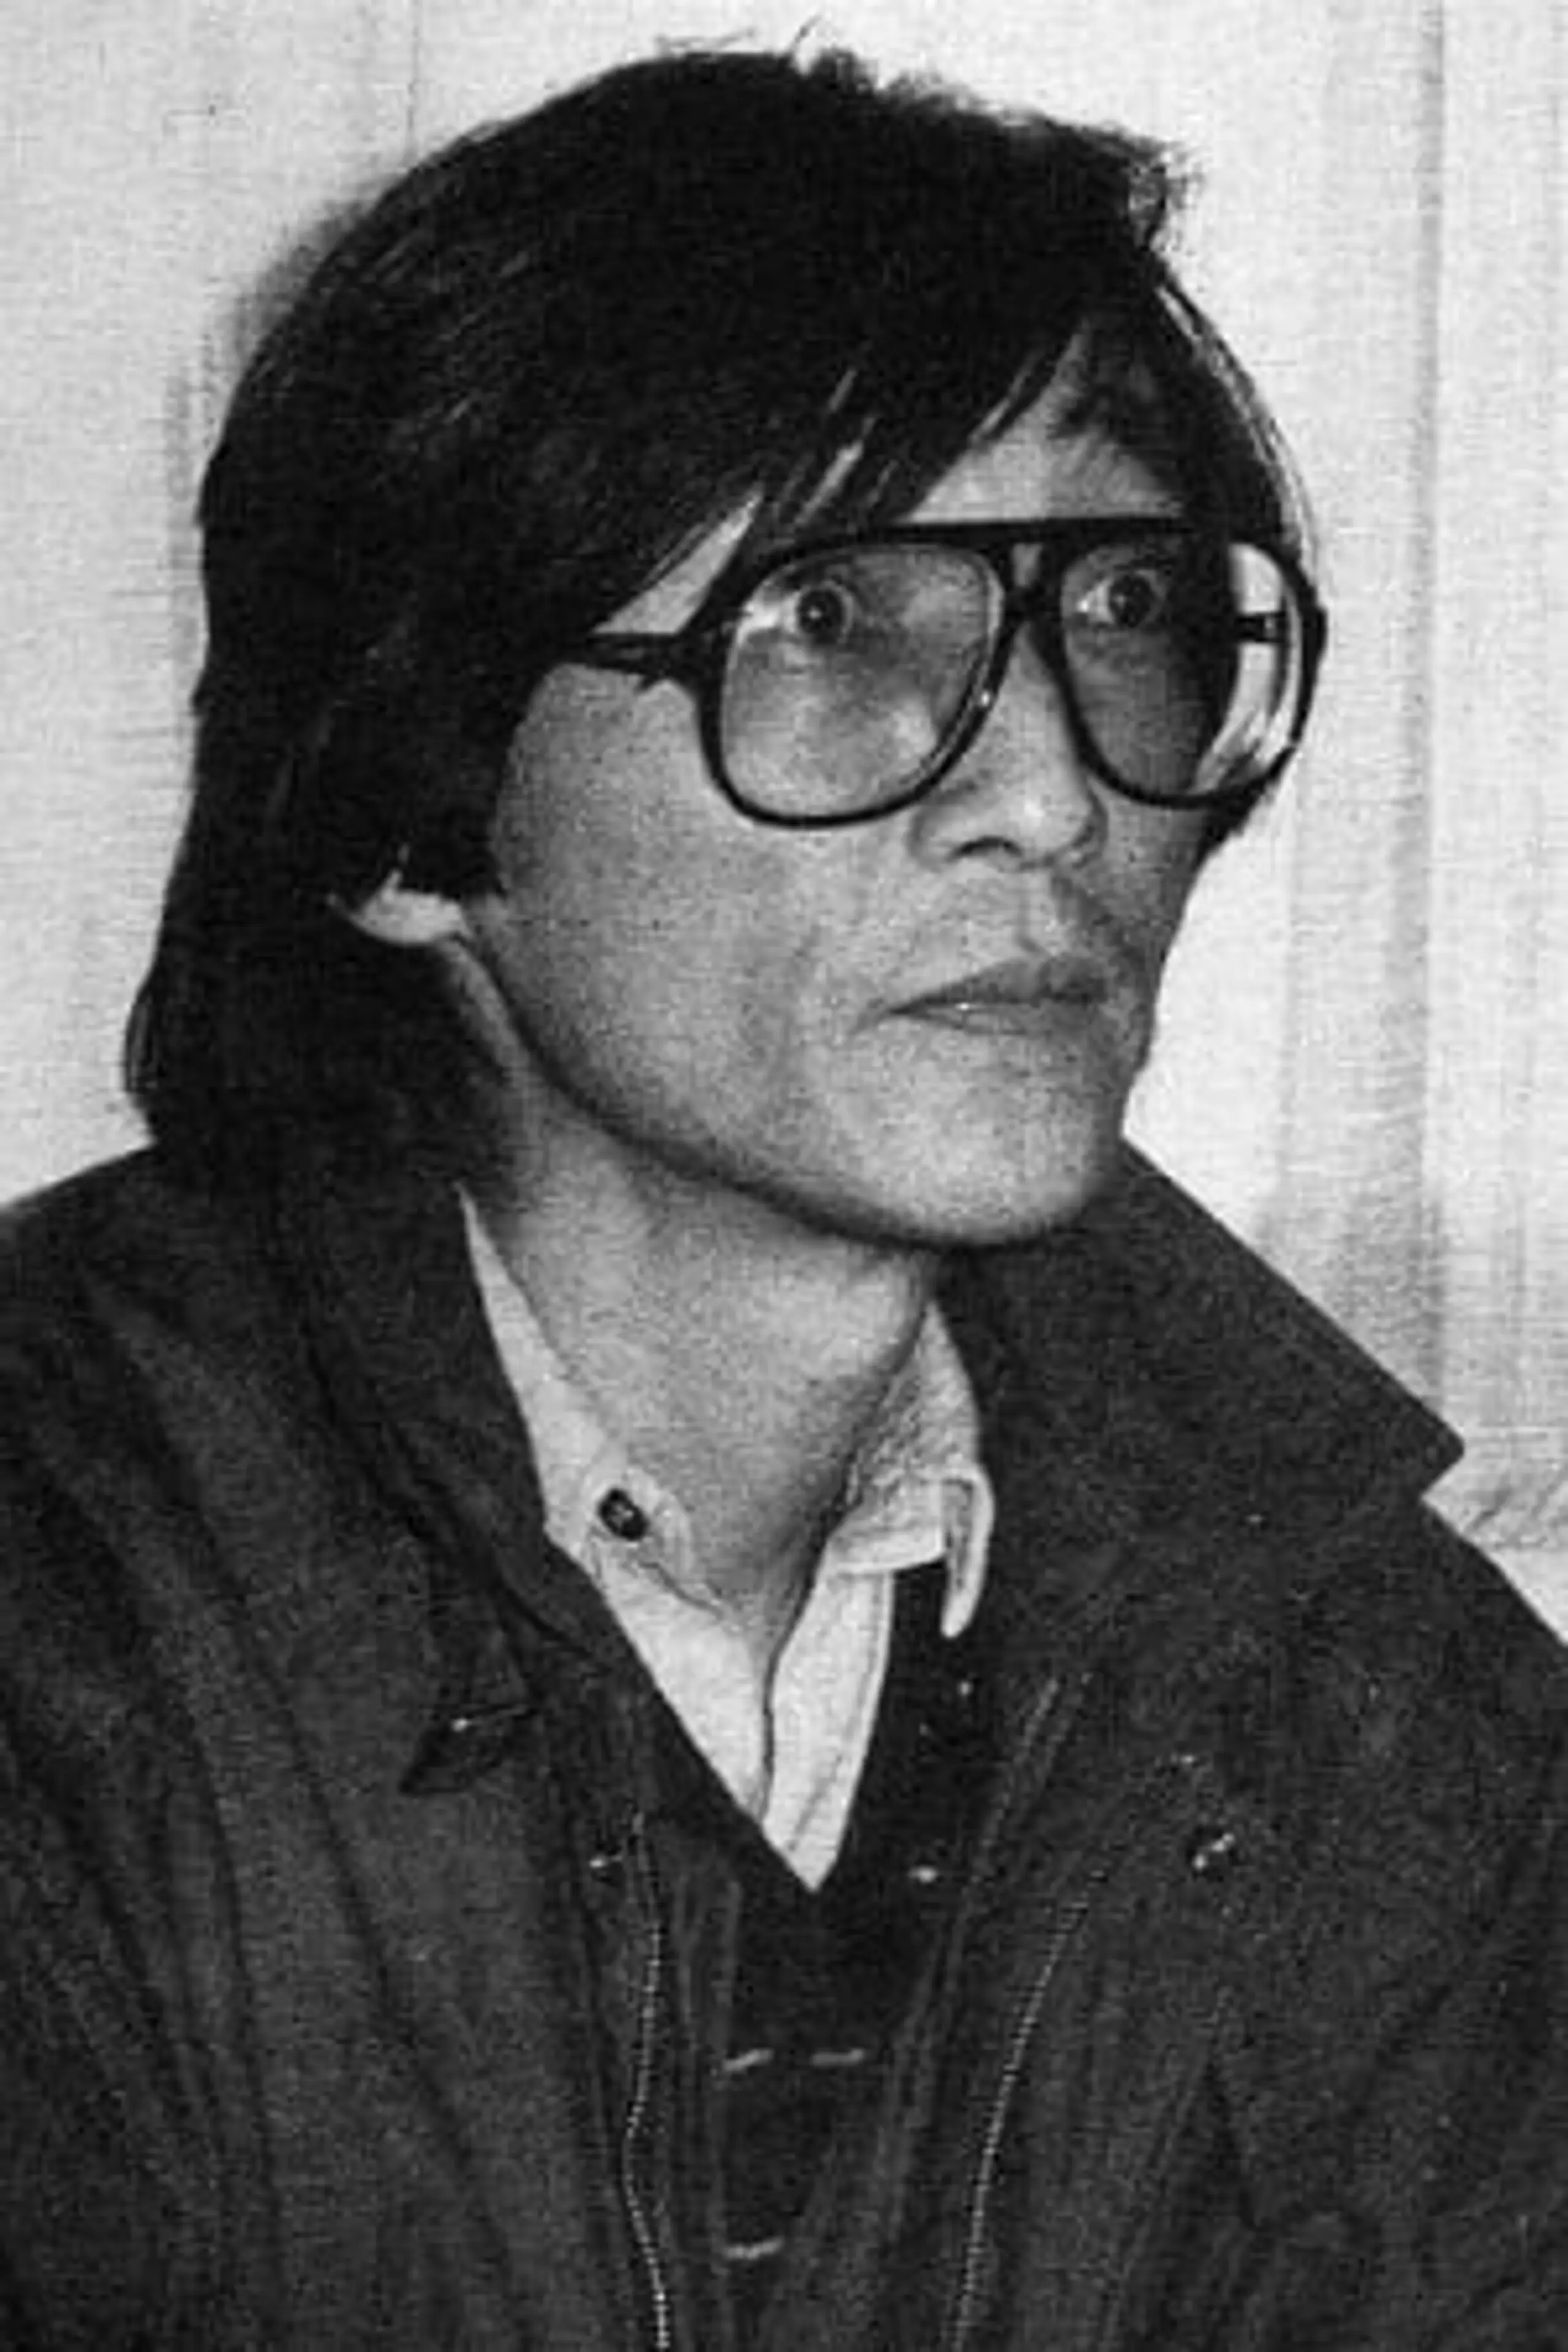 Hiroyuki Hoshiyama